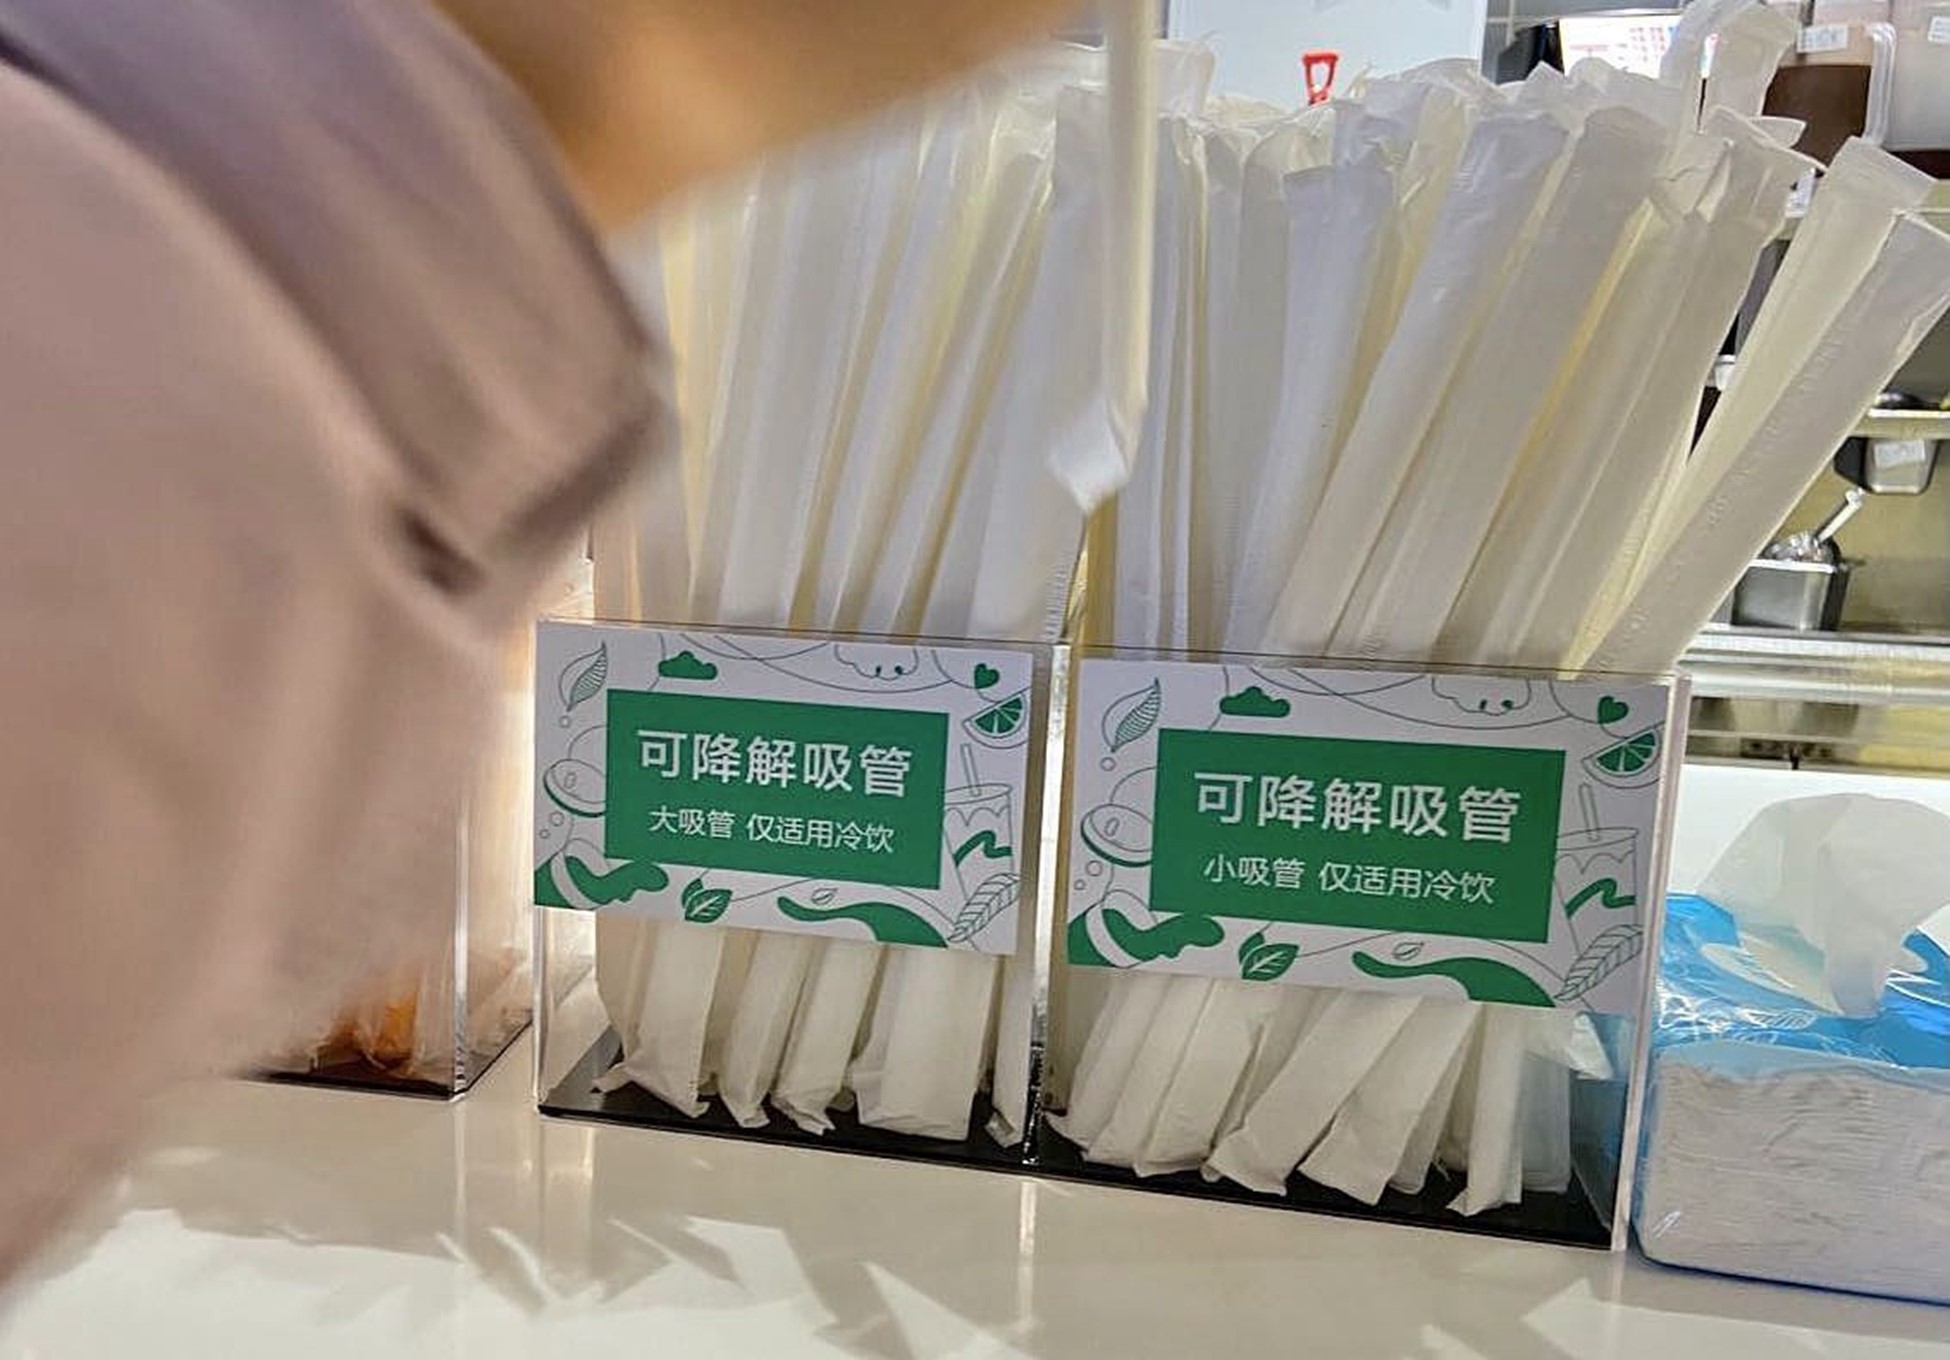 Plastic straws vanish from China as ban kicks in